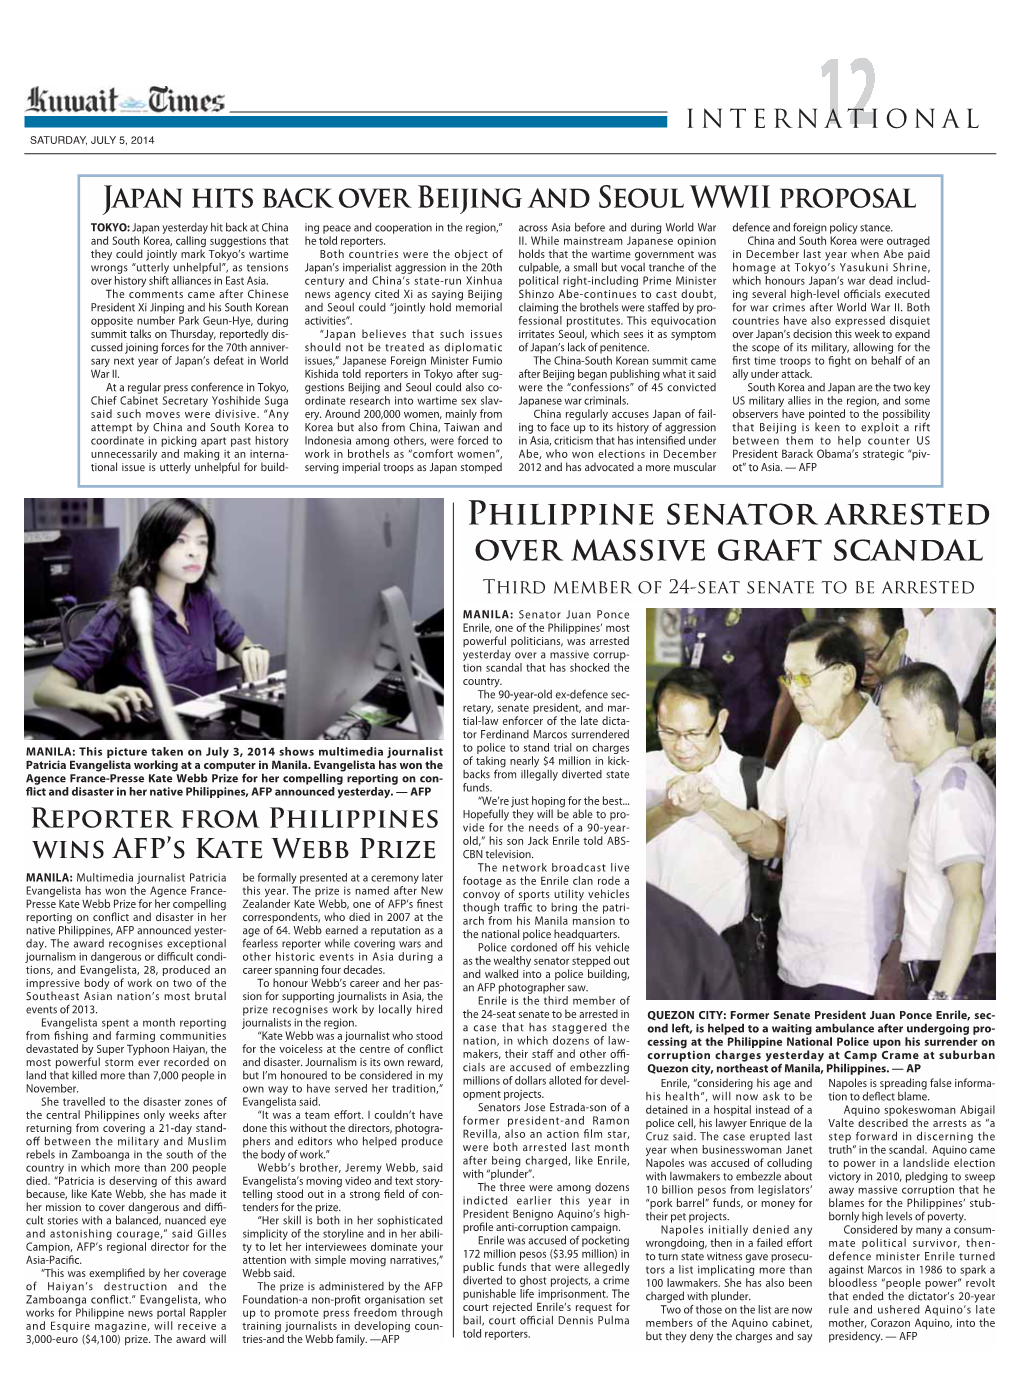 Philippine Senator Arrested Over Massive Graft Scandal Third Member of 24-Seat Senate to Be Arrested